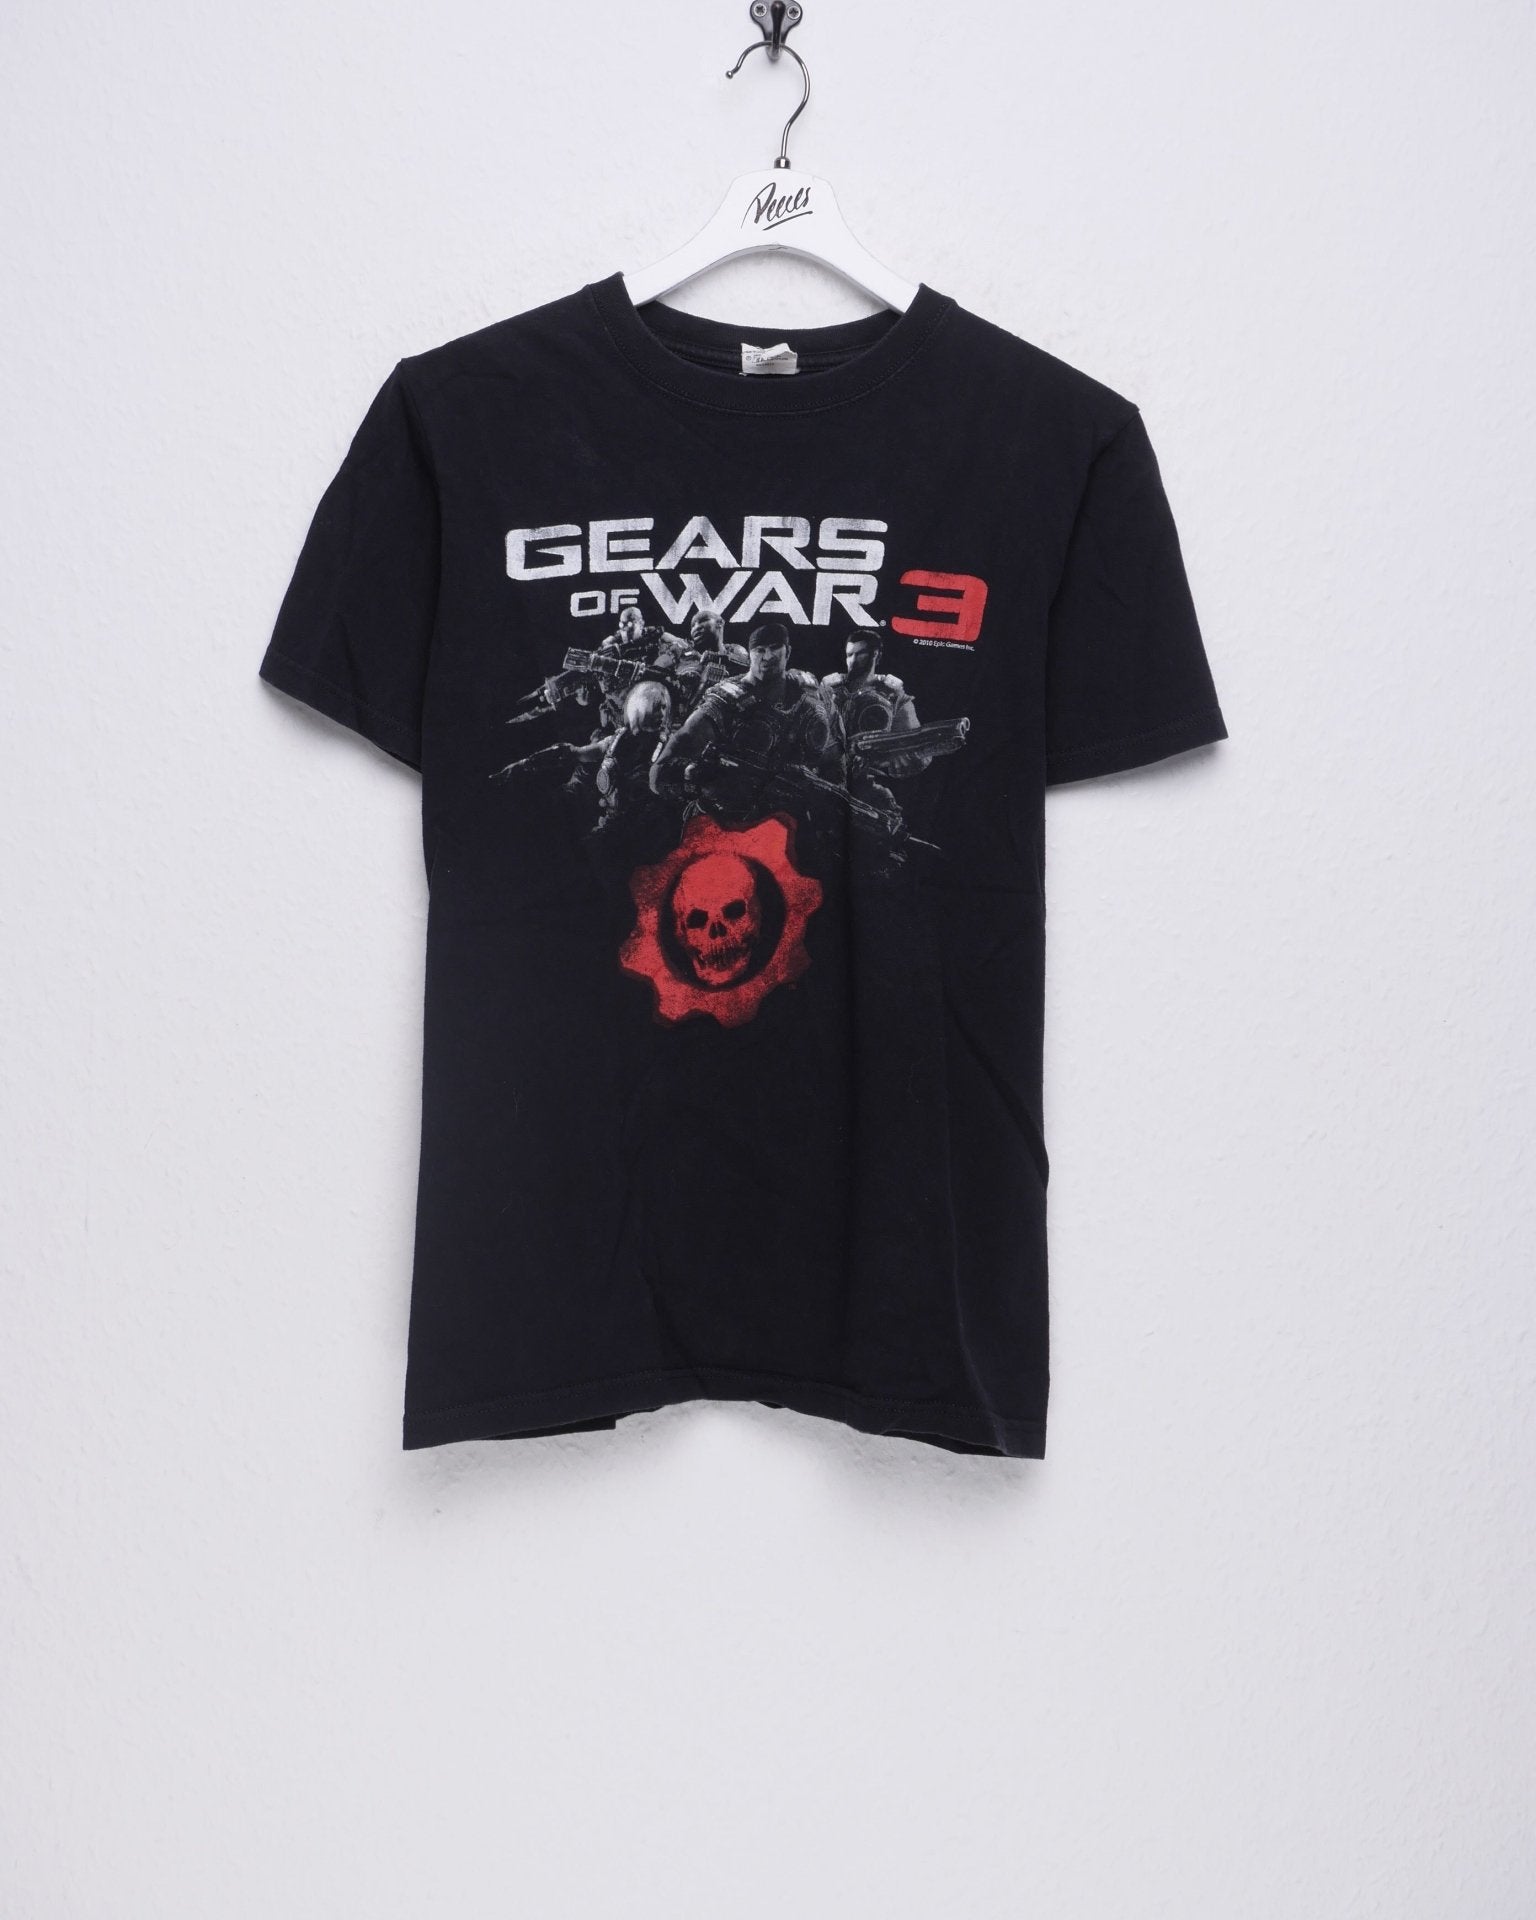 printed 'Gears of War' Graphic black Shirt - Peeces